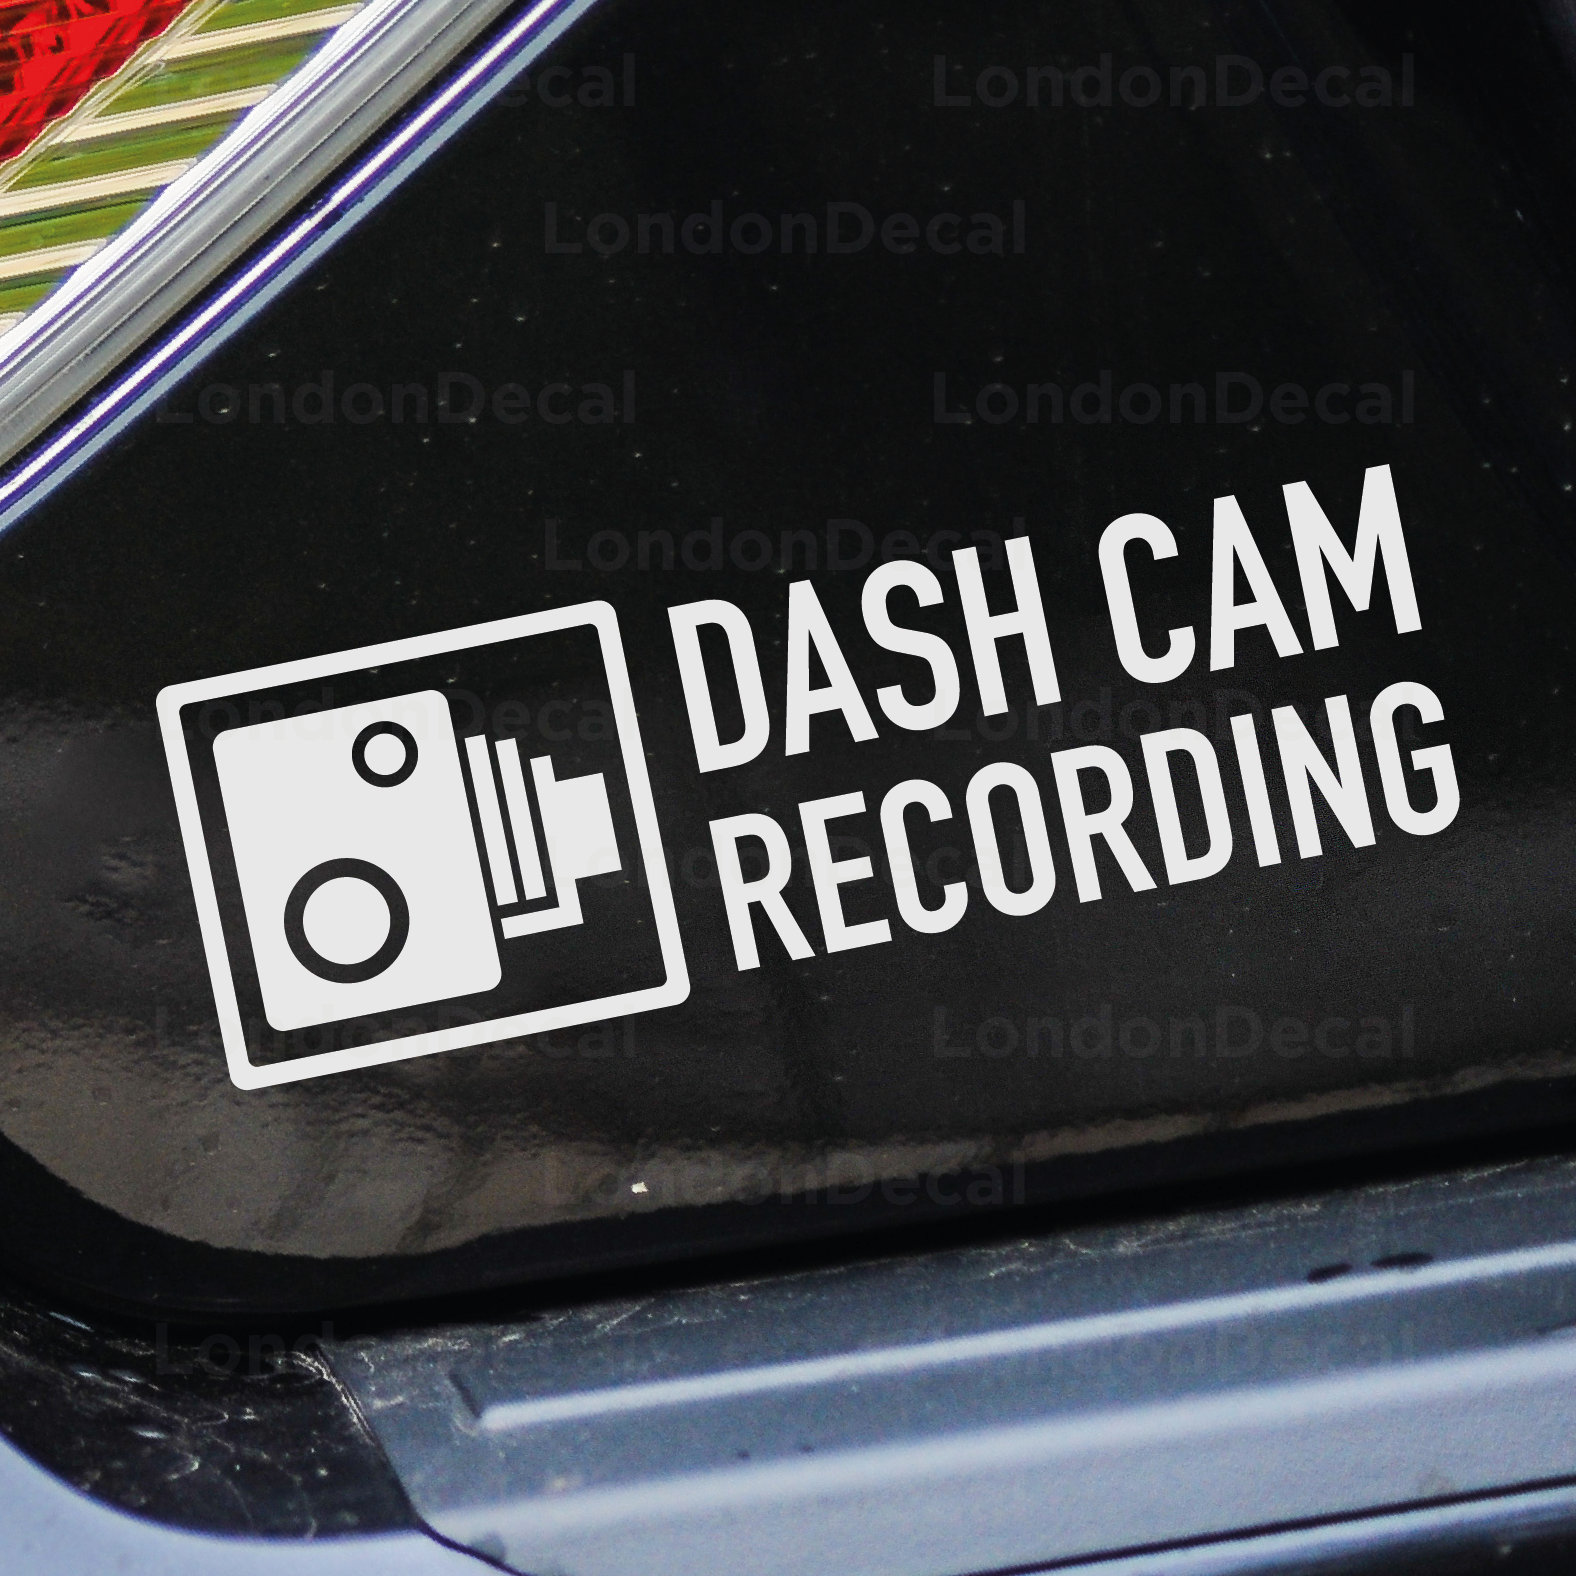 Dash Cam Recording Car Security Window Bumper Vinyl Decal Sticker CCTV Car Van 